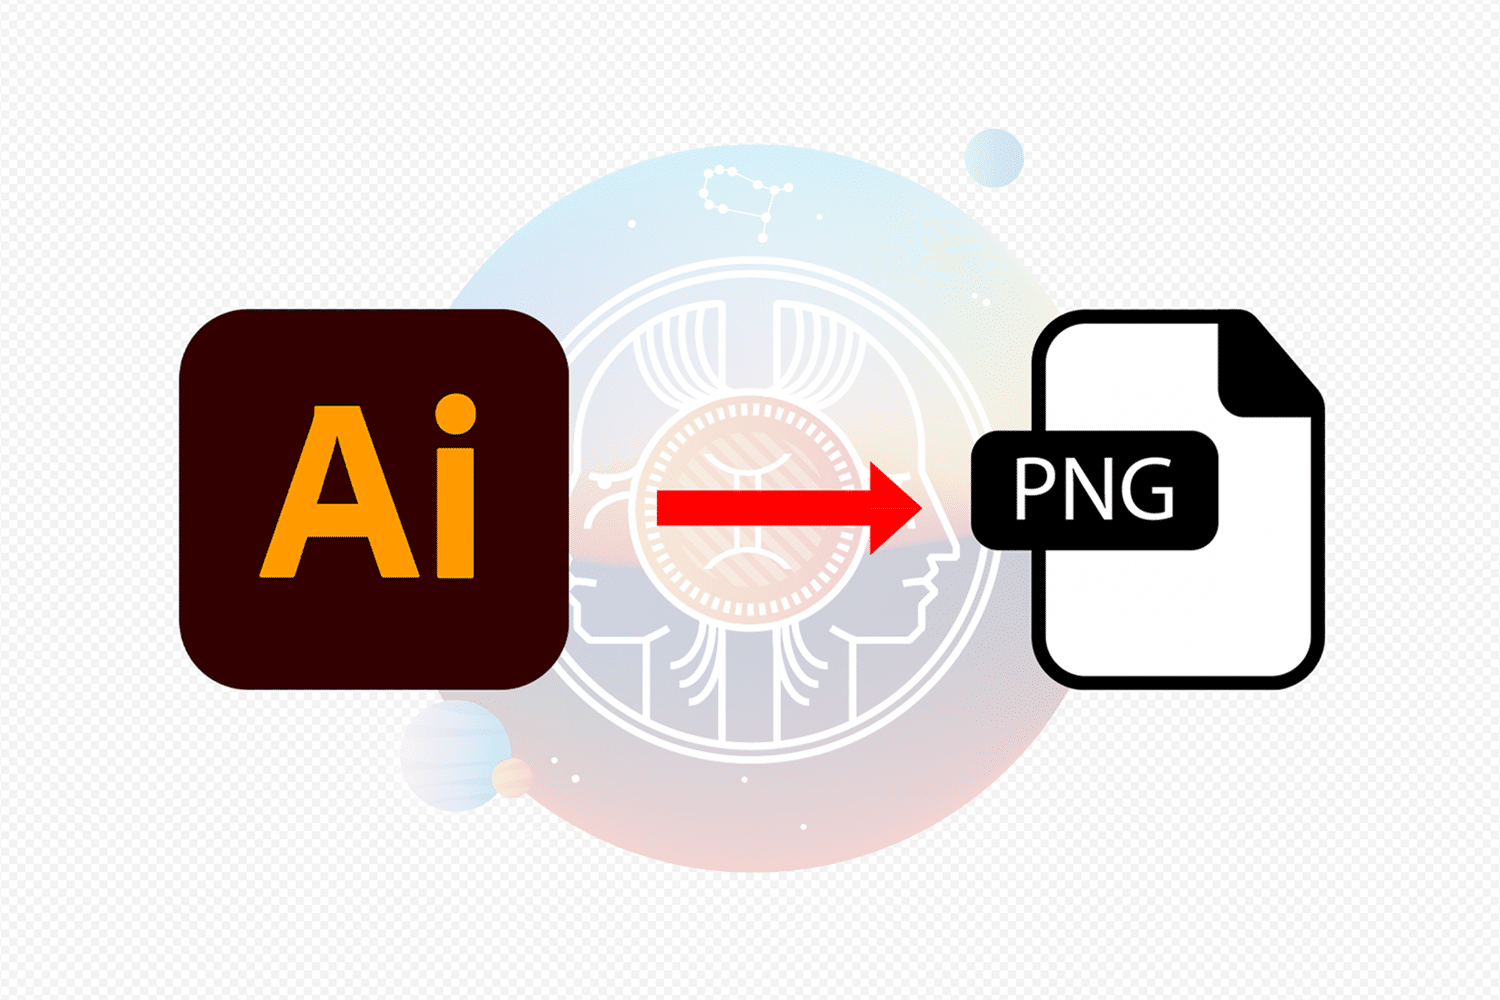 Comment enregistrer au format png avec Illustrator et fond transparent